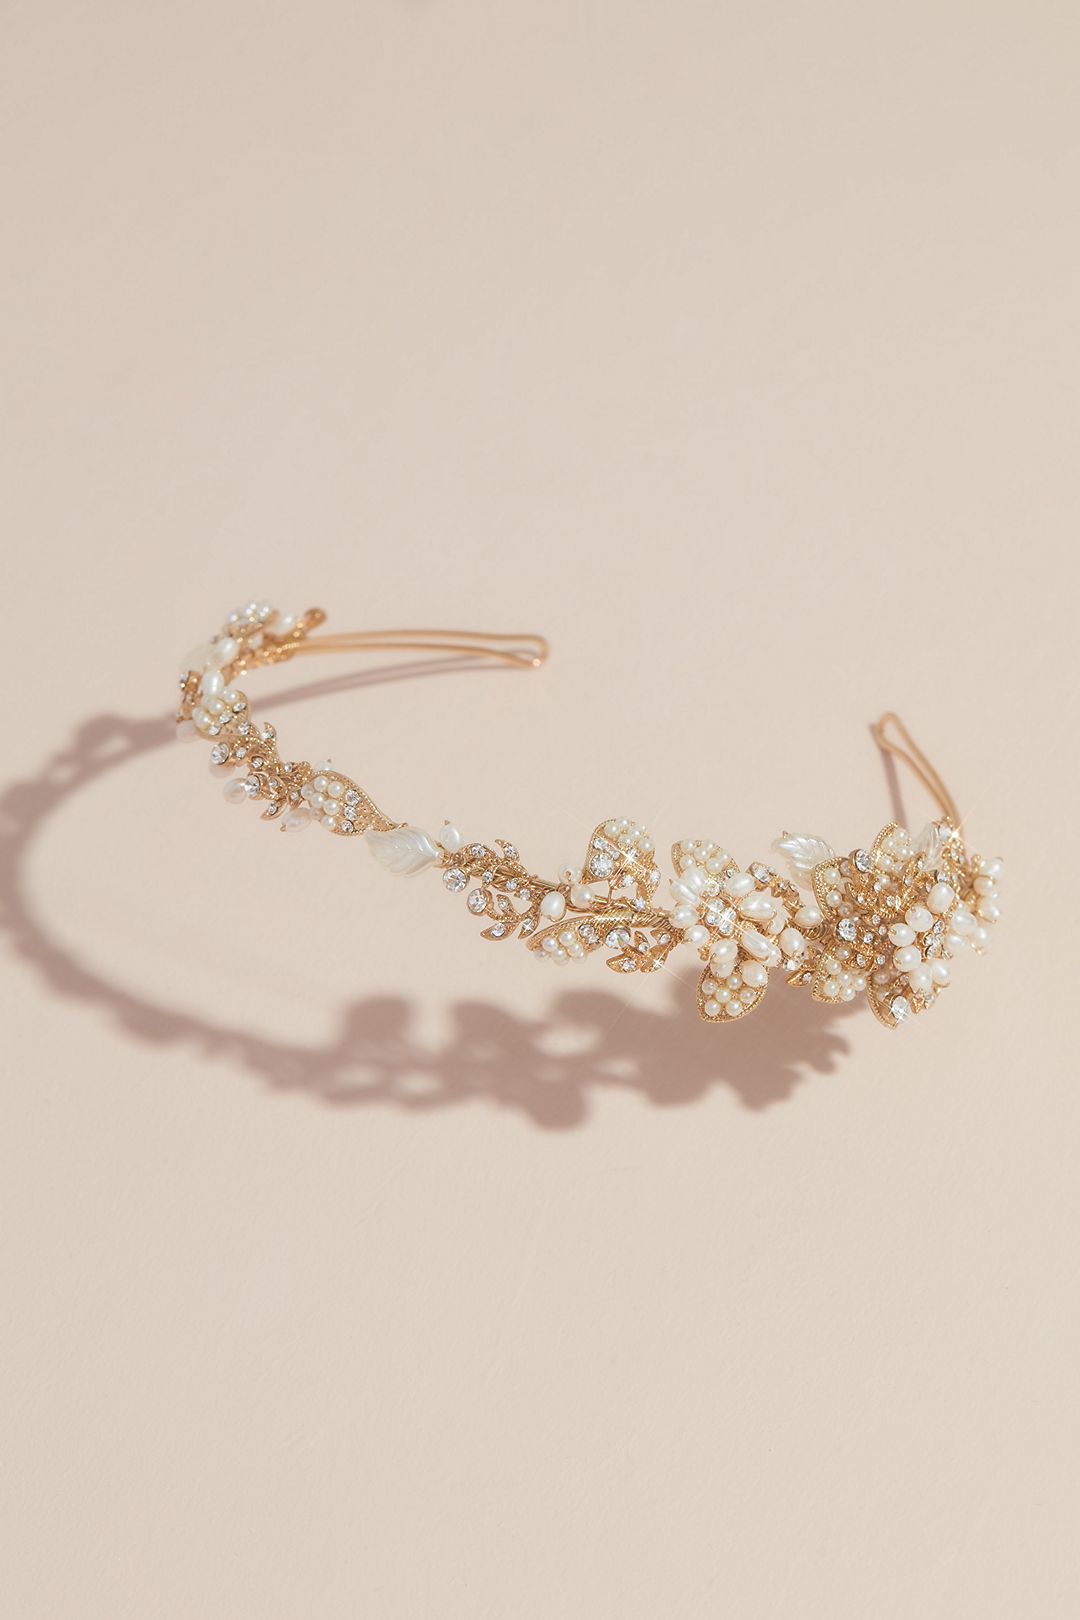 Vintage-Inspired Pearl and Crystal Flower Headband Image 1